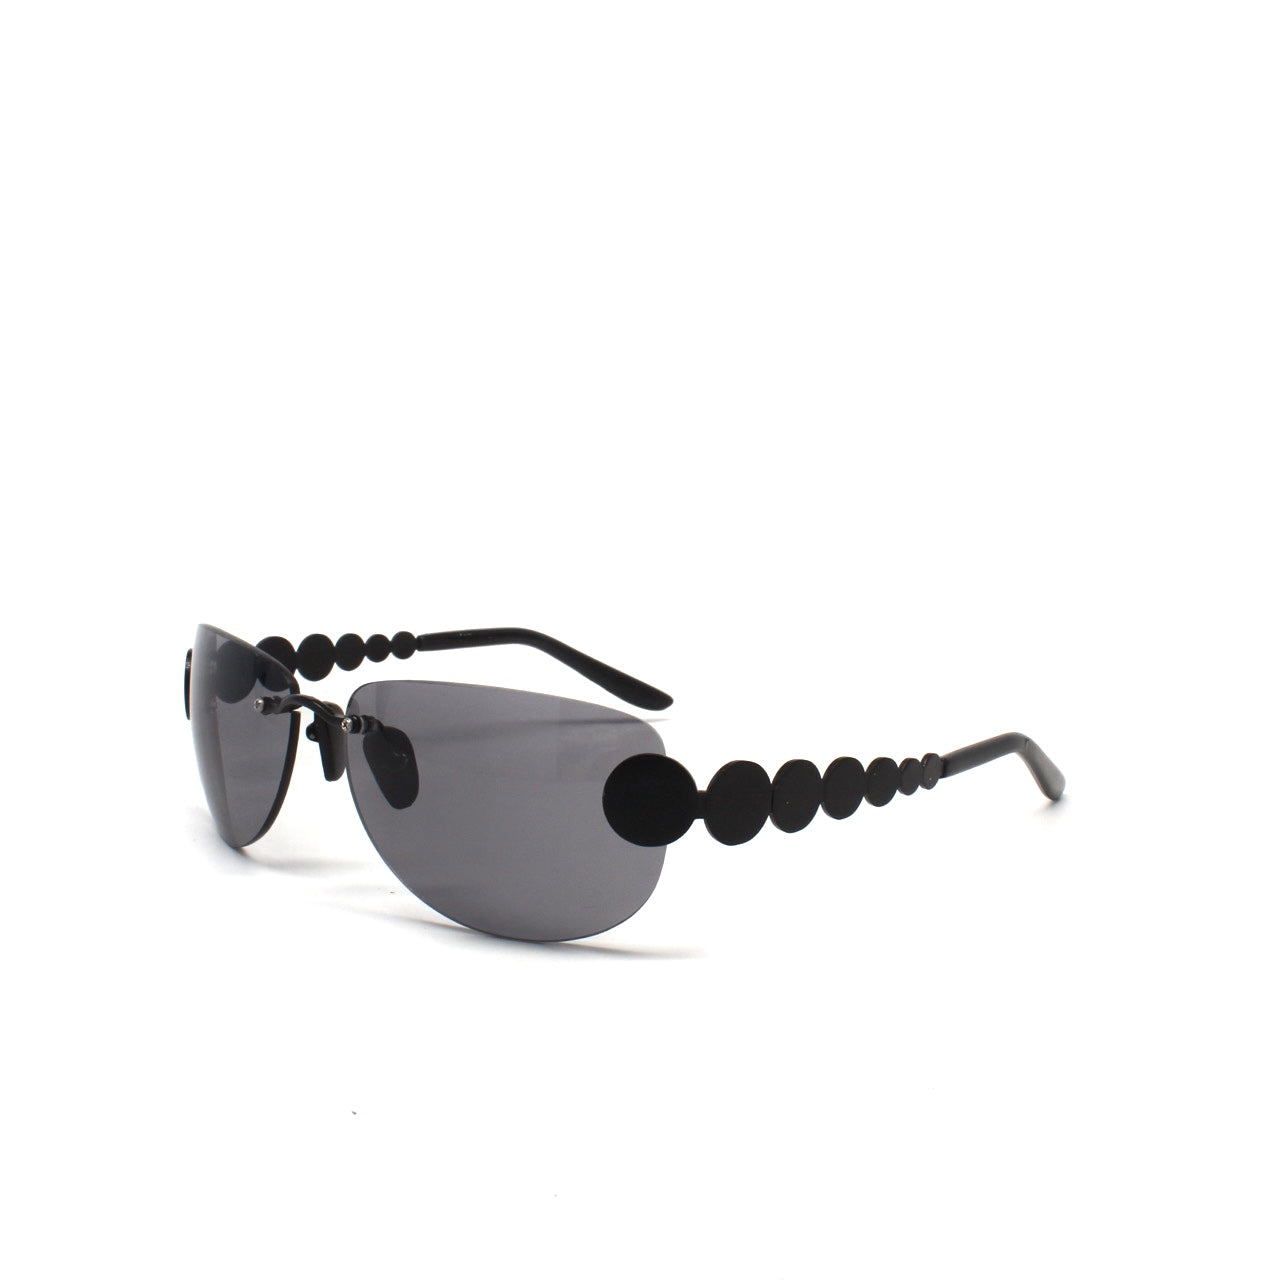 Vintage Standard Sized 2000 Grey Non Framed Sunglasses - Grey